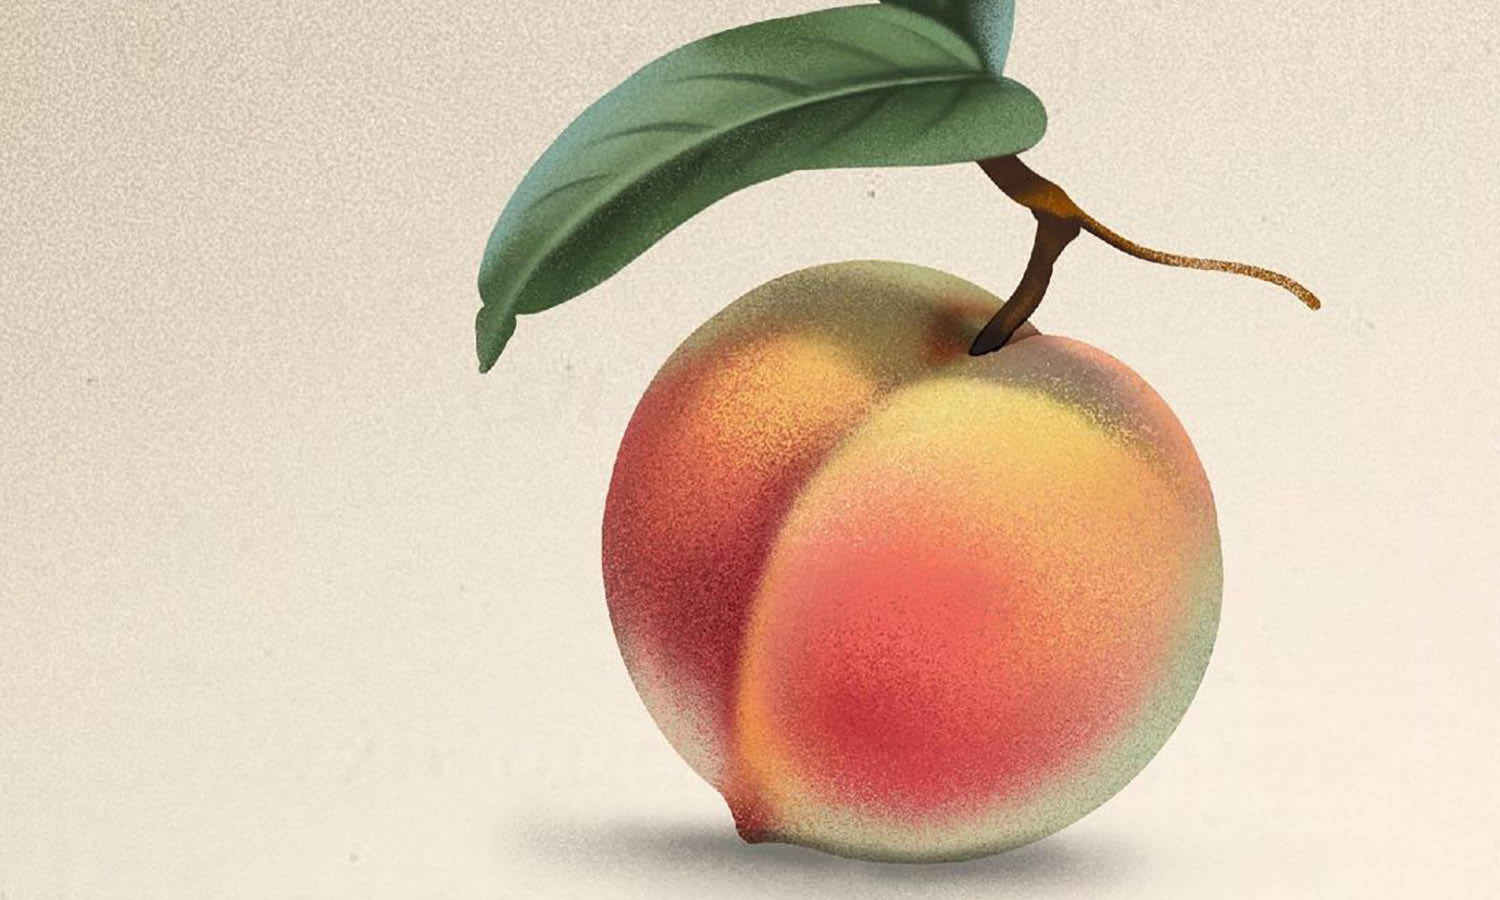 30 Best Peach Illustration Ideas You Should Check